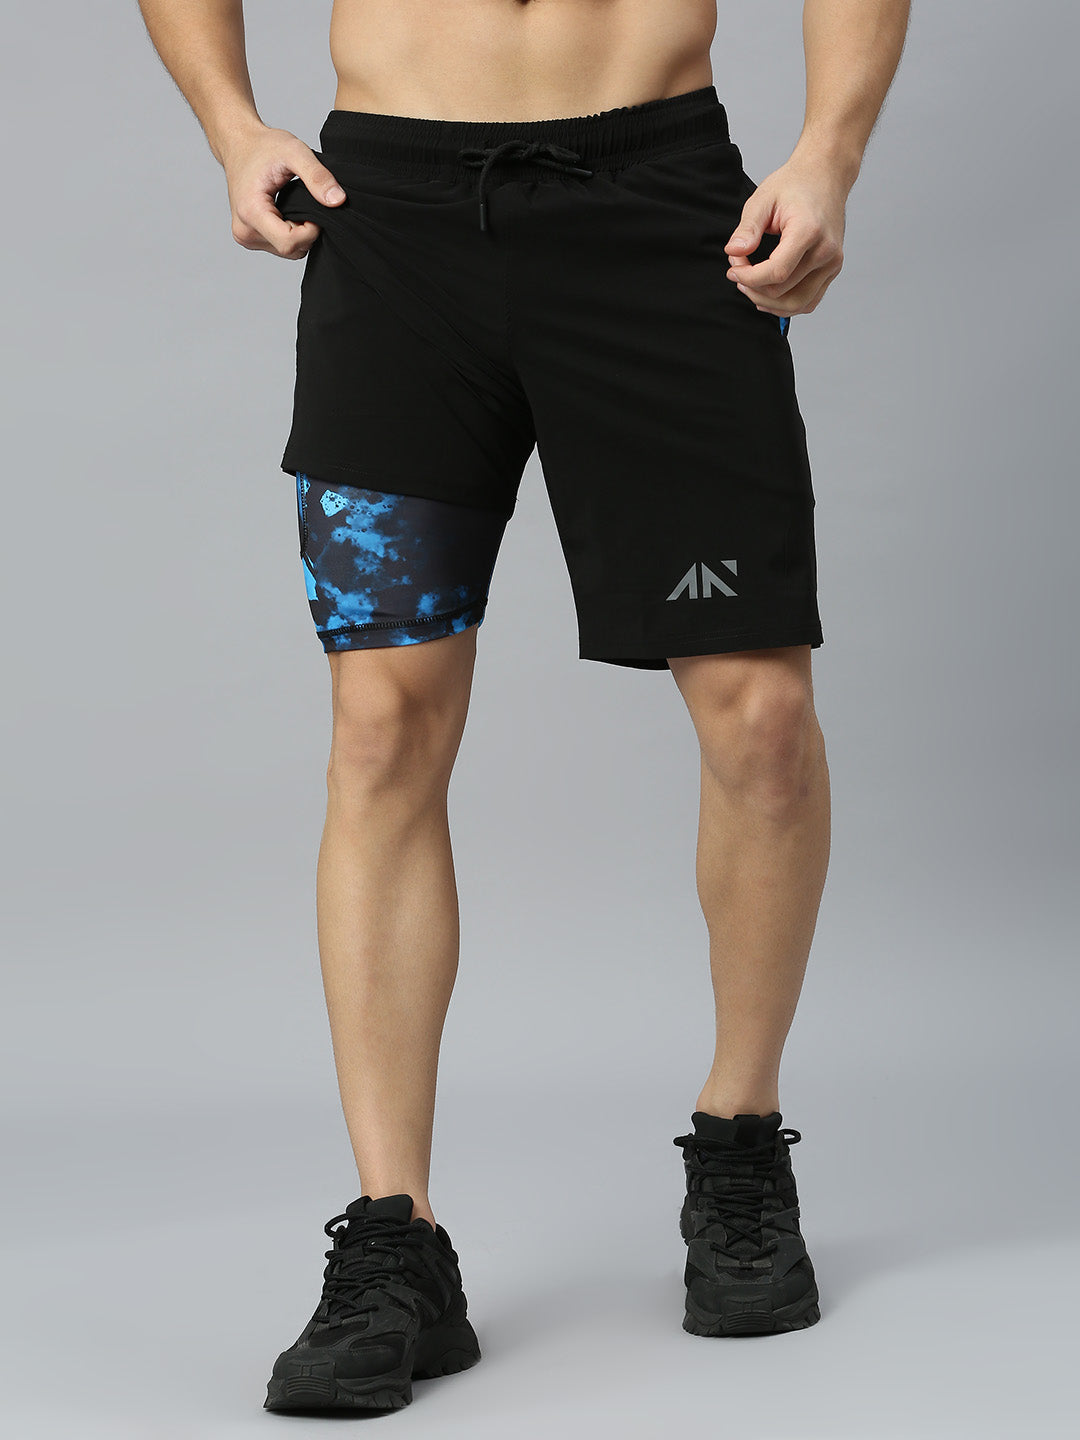 Enzo Mens Fleece Shorts Running Jogging Bottoms Gym Elasticated Waist Half  Pants | eBay